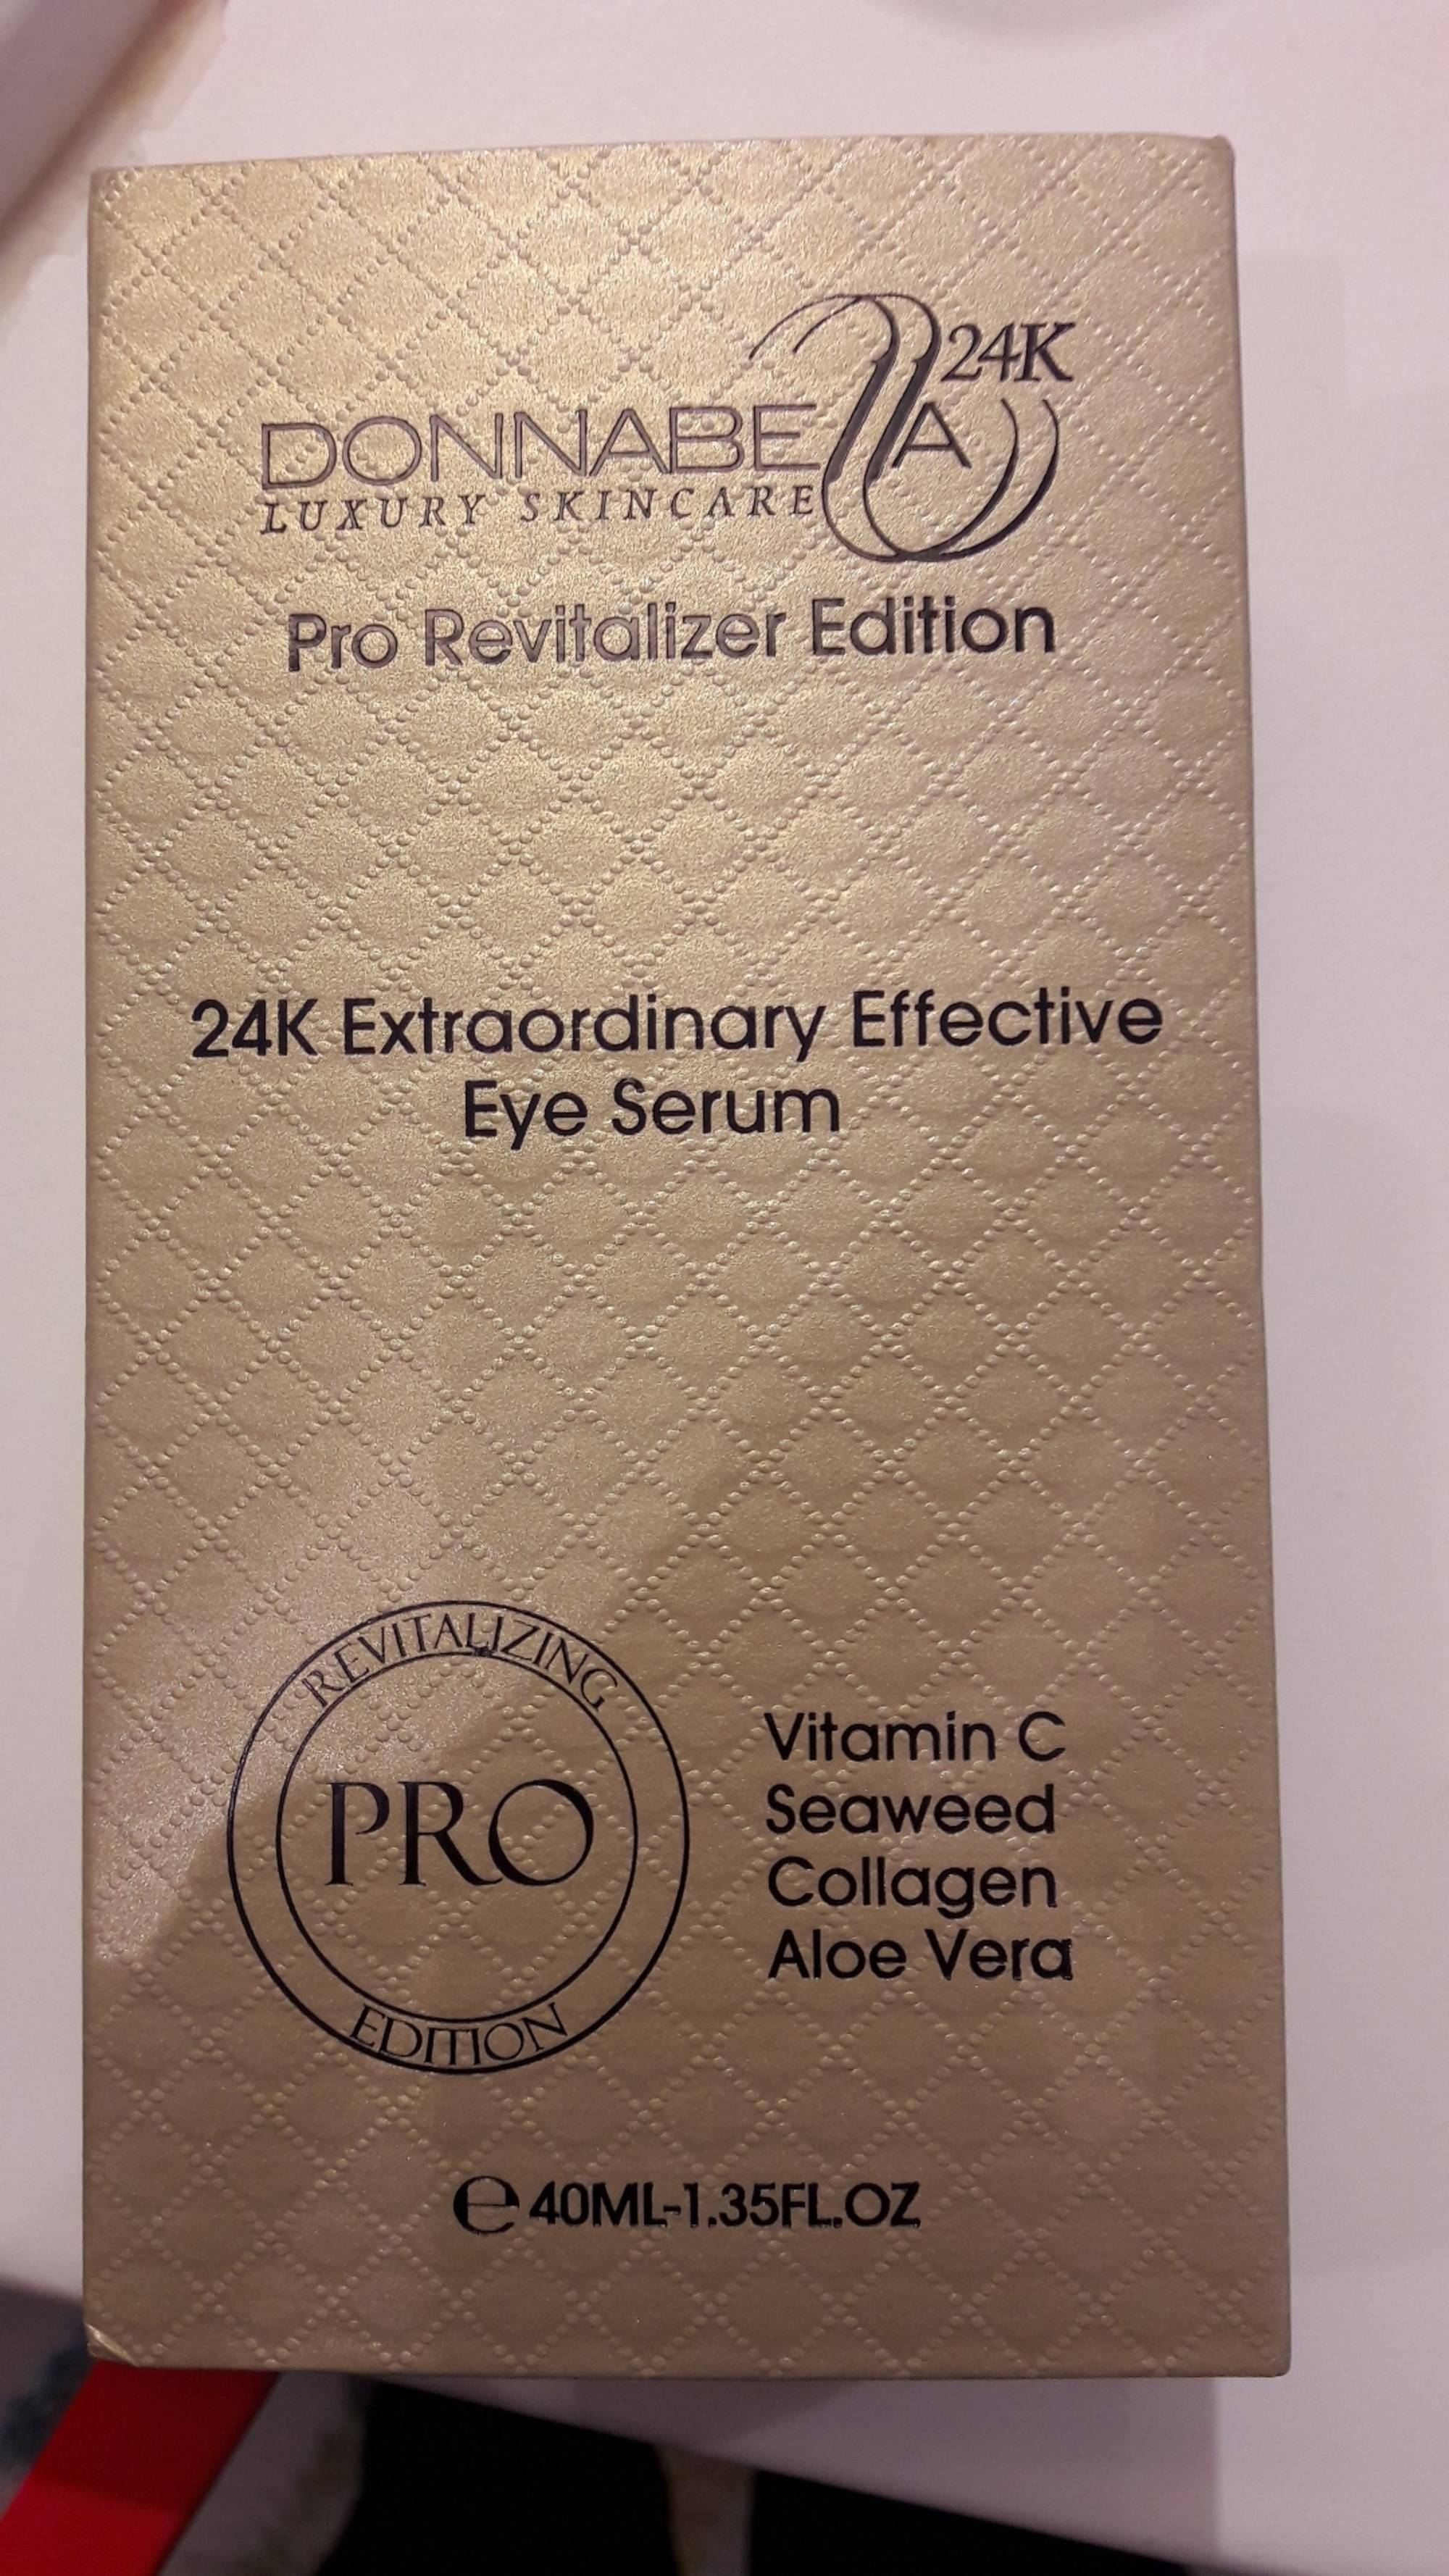 DONNA BELLA - Pro revitalizer edition - 24k extraordinary effective eye serum